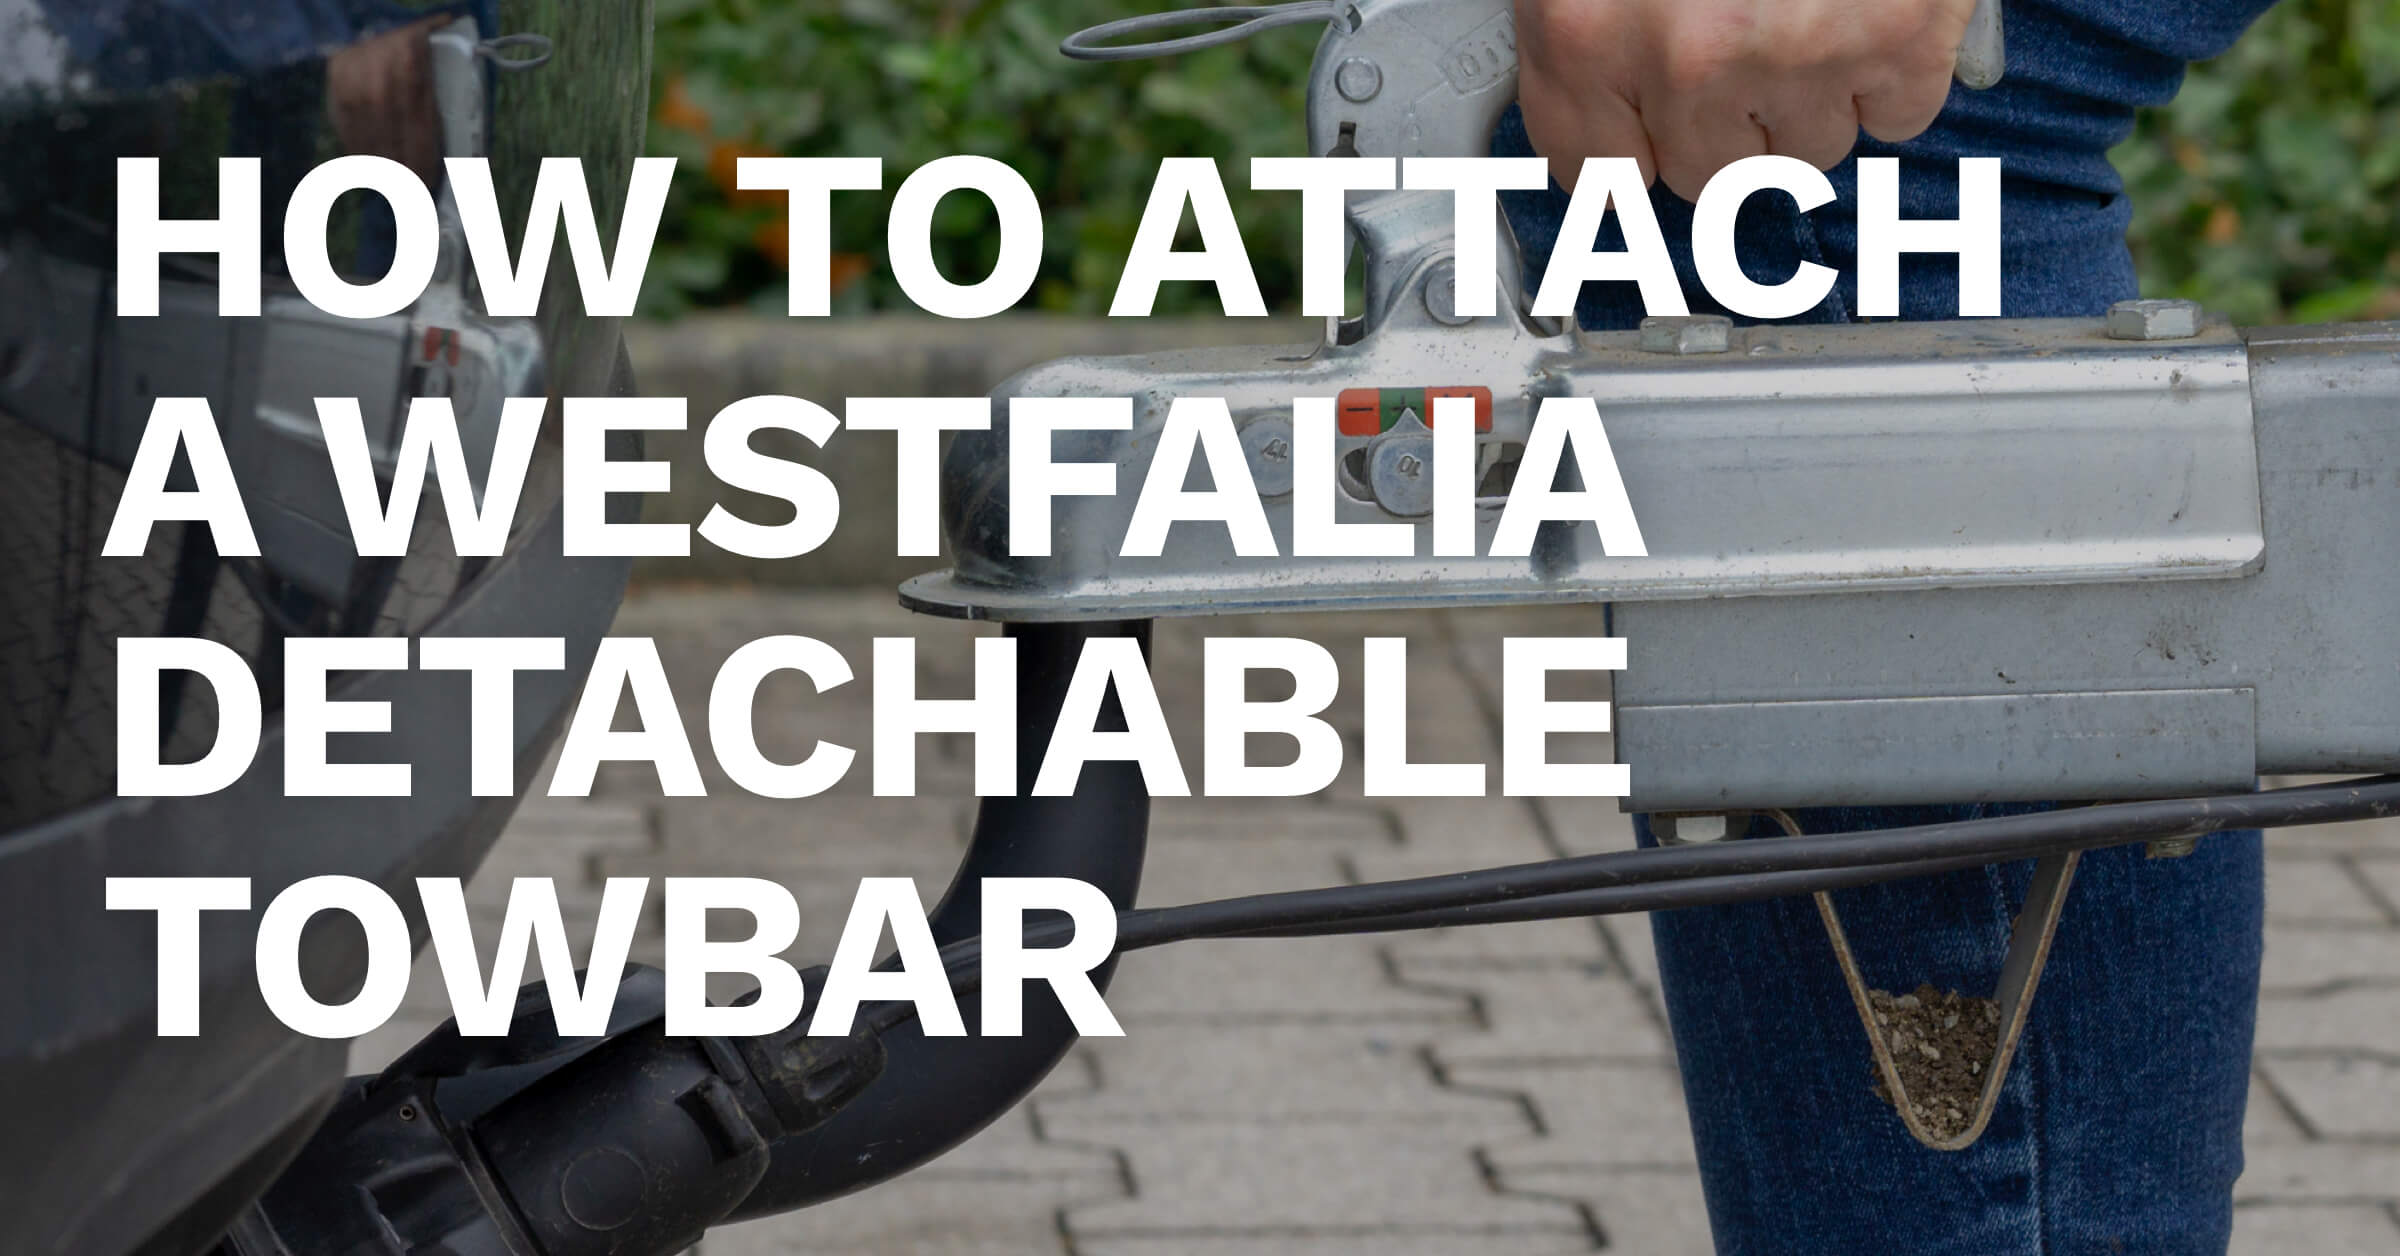 How to Attach a Westfalia Detachable Towbar